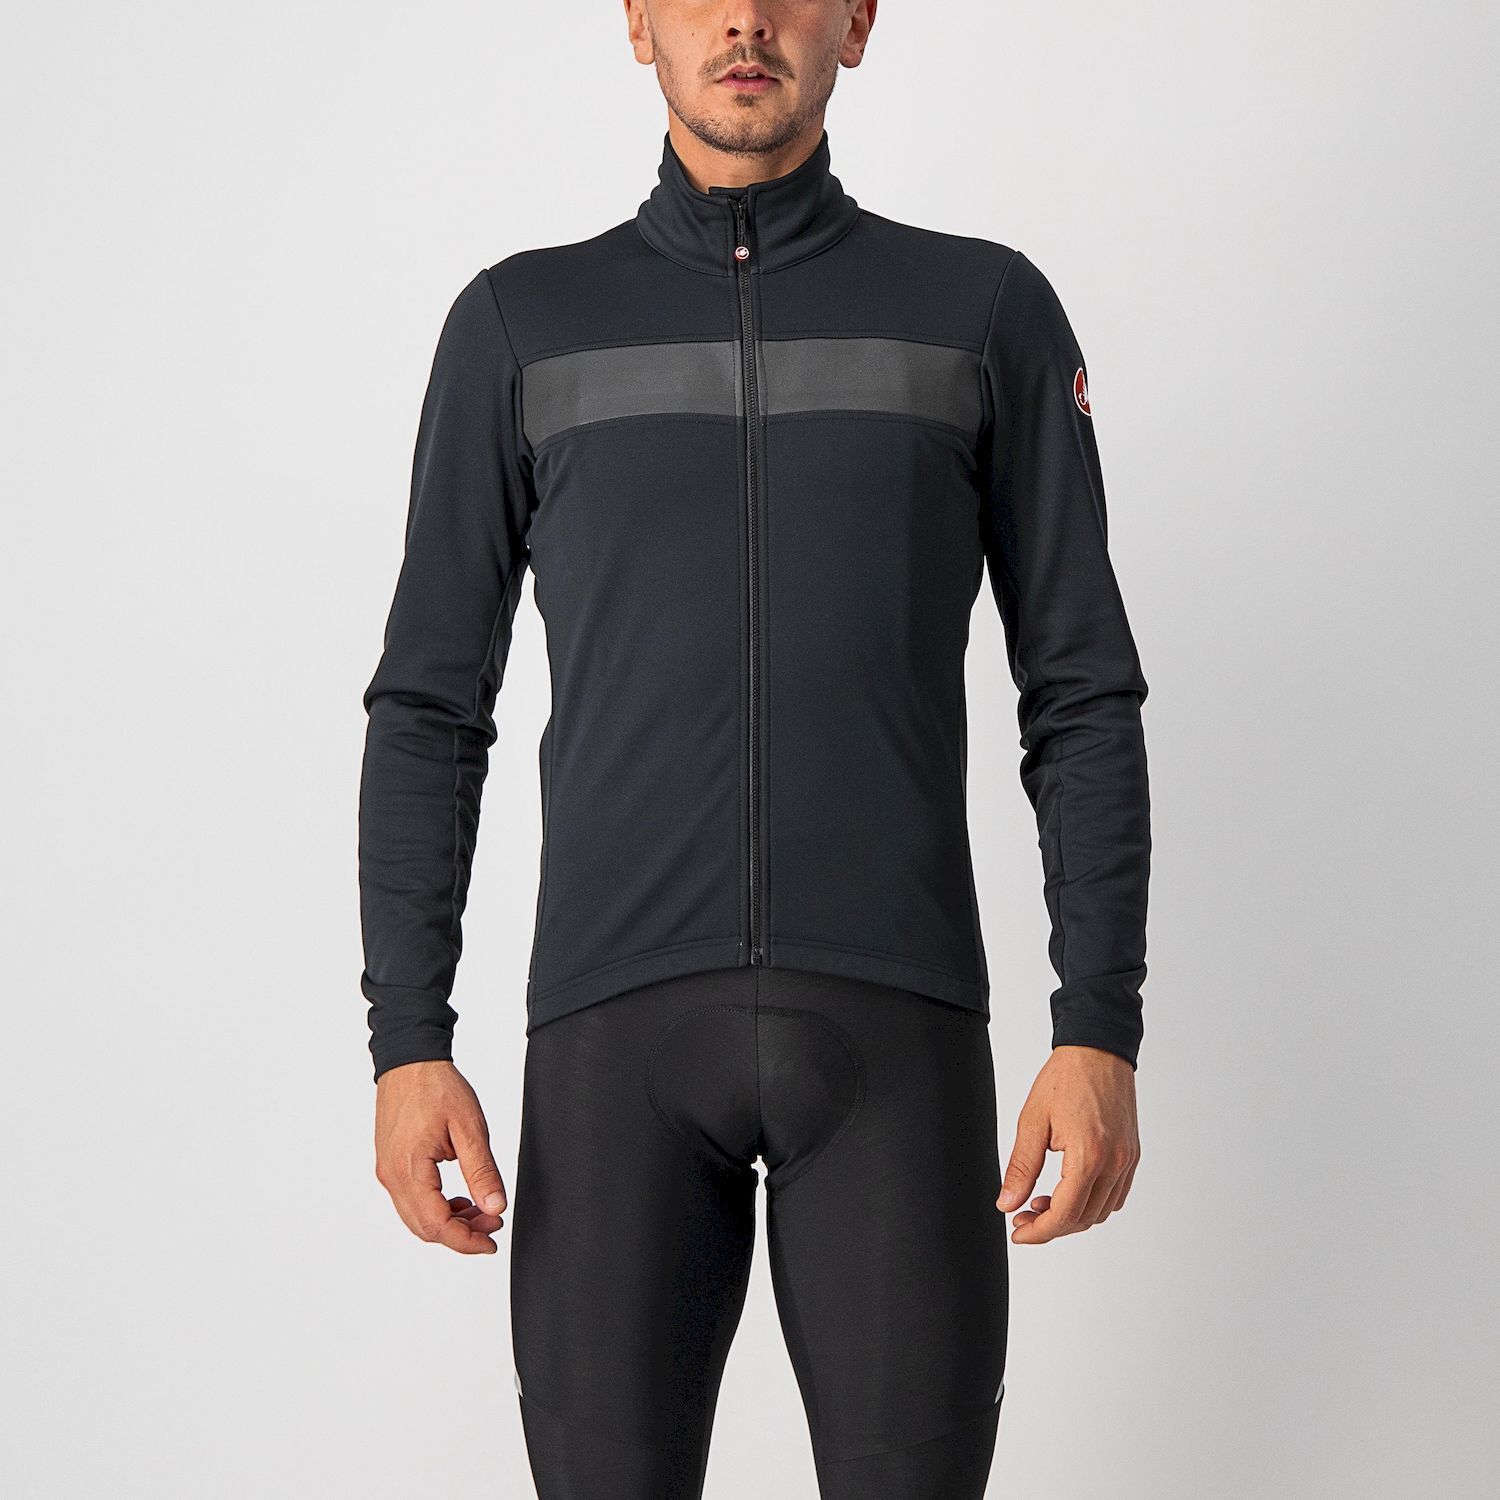 Castelli Raddoppia 3 Jacket - Cycling jacket - Men's